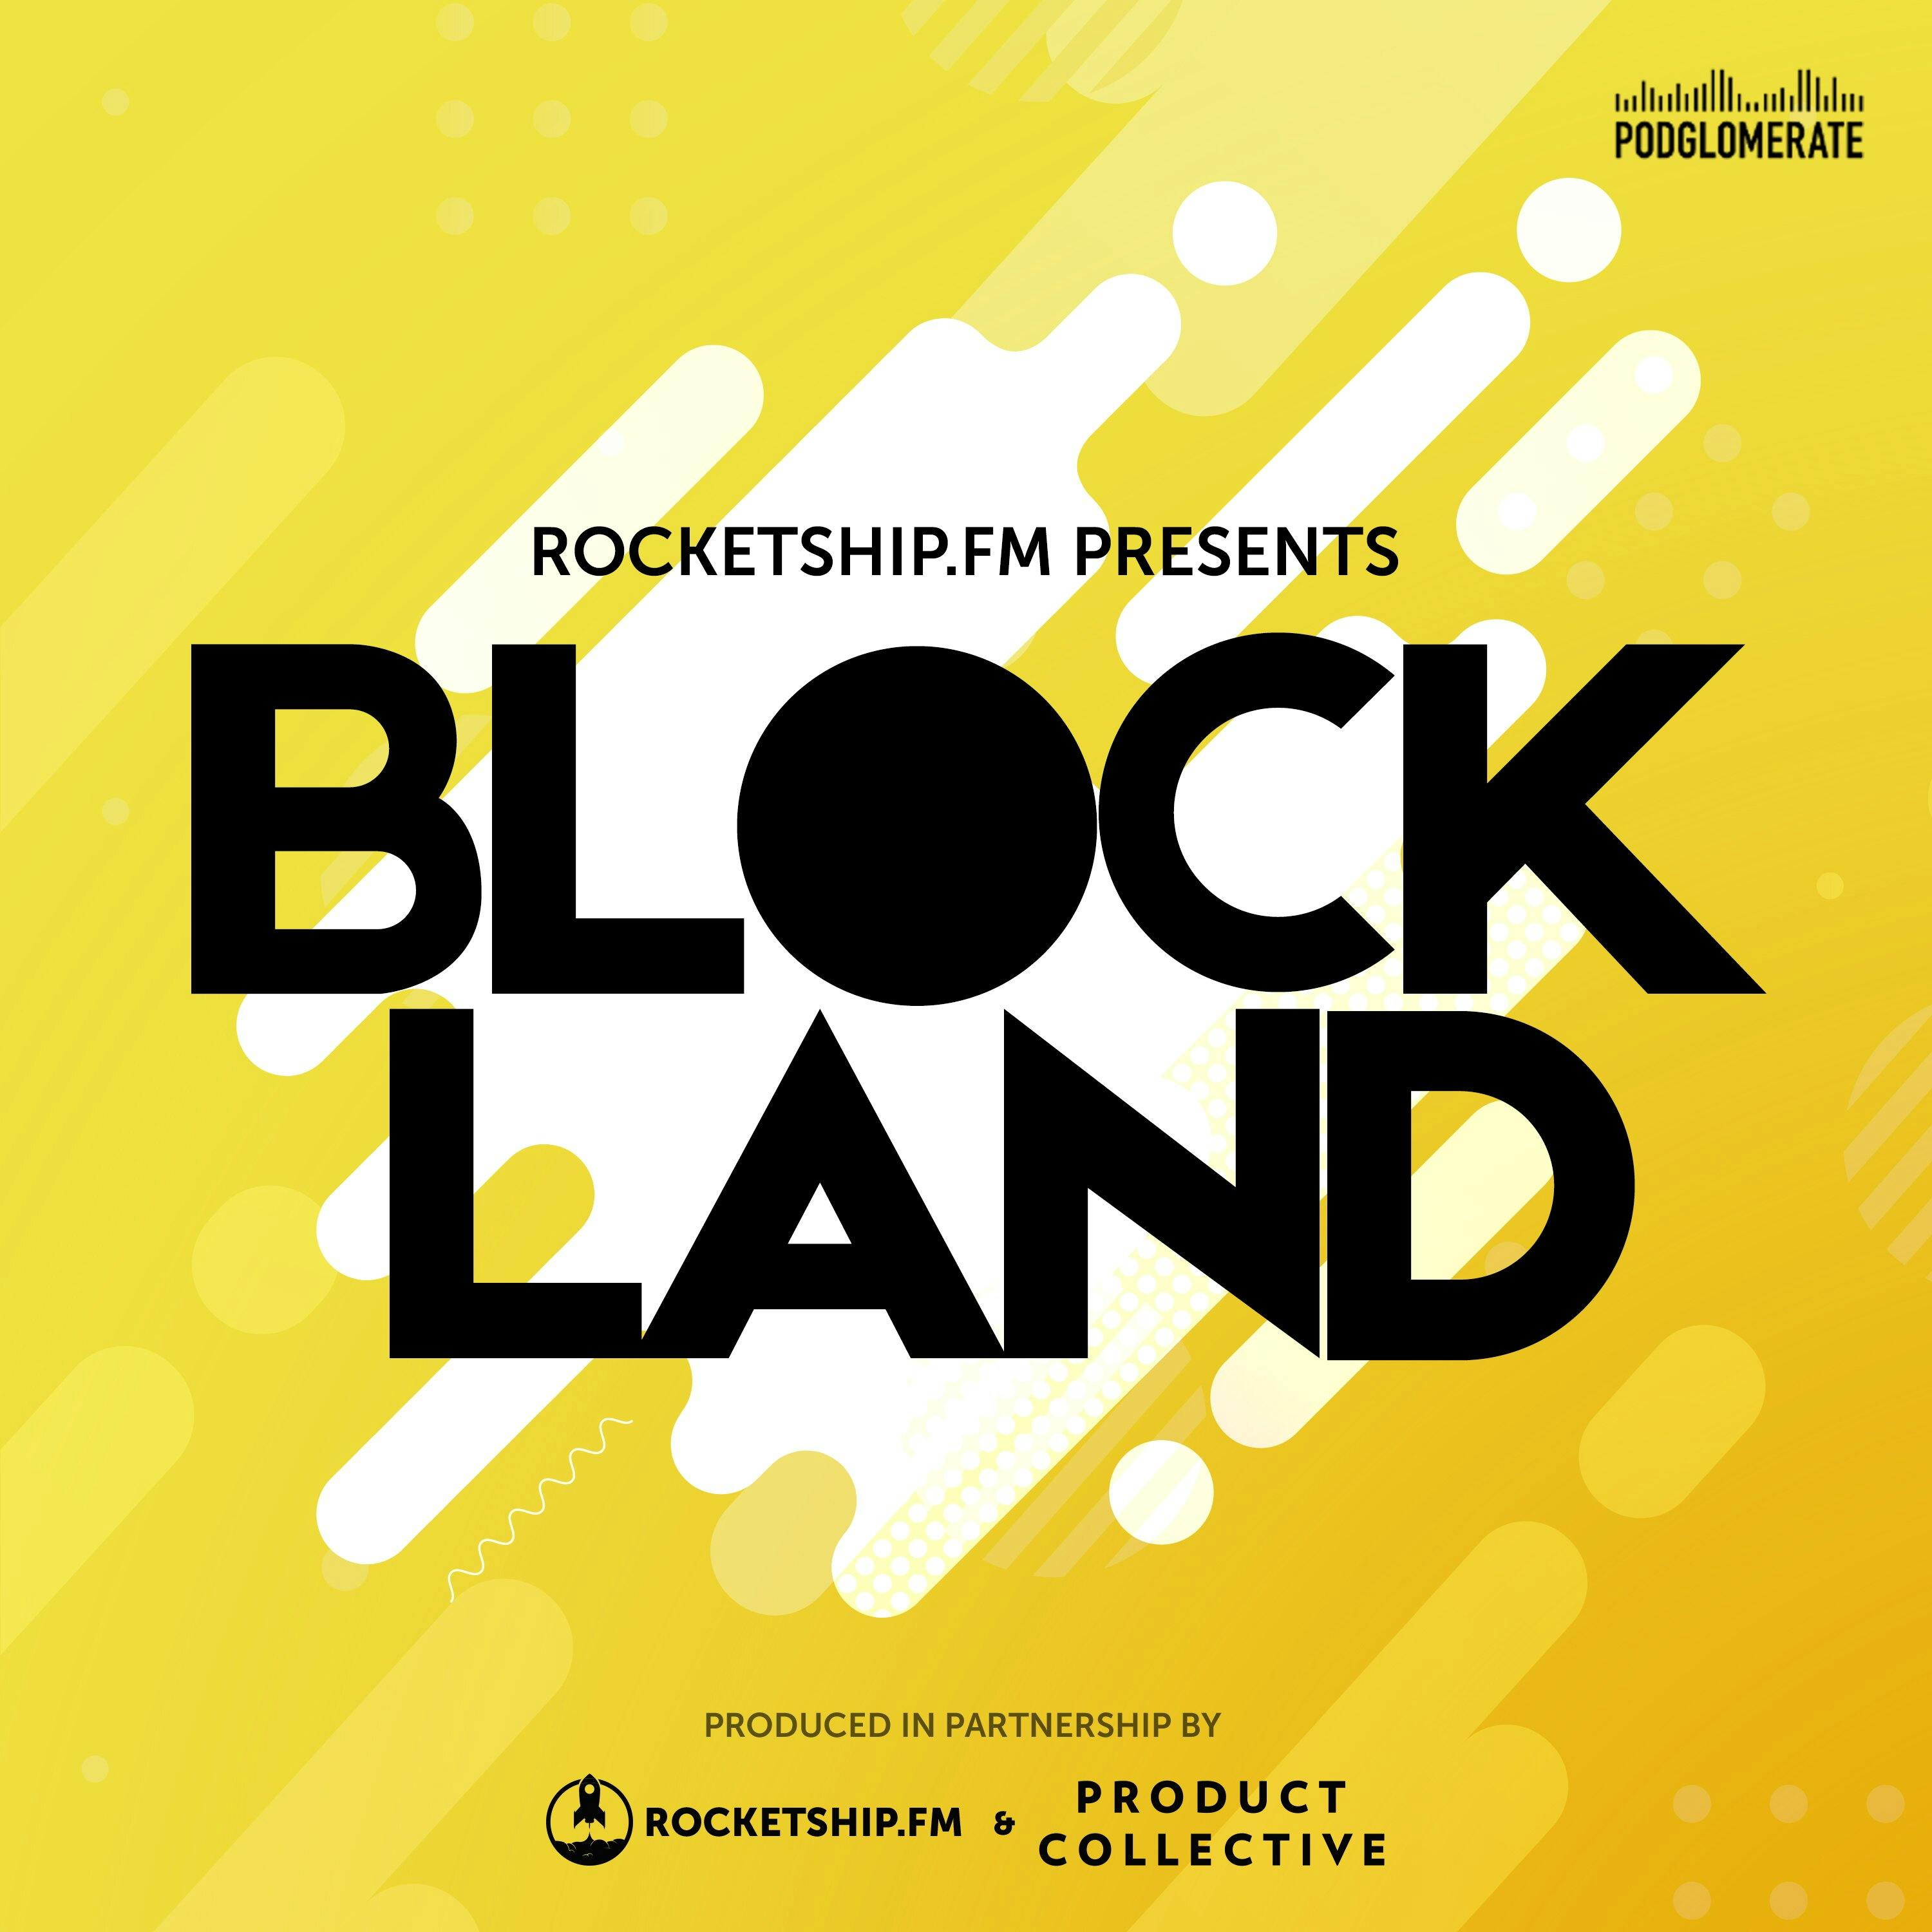 Blockland: Blockchain today